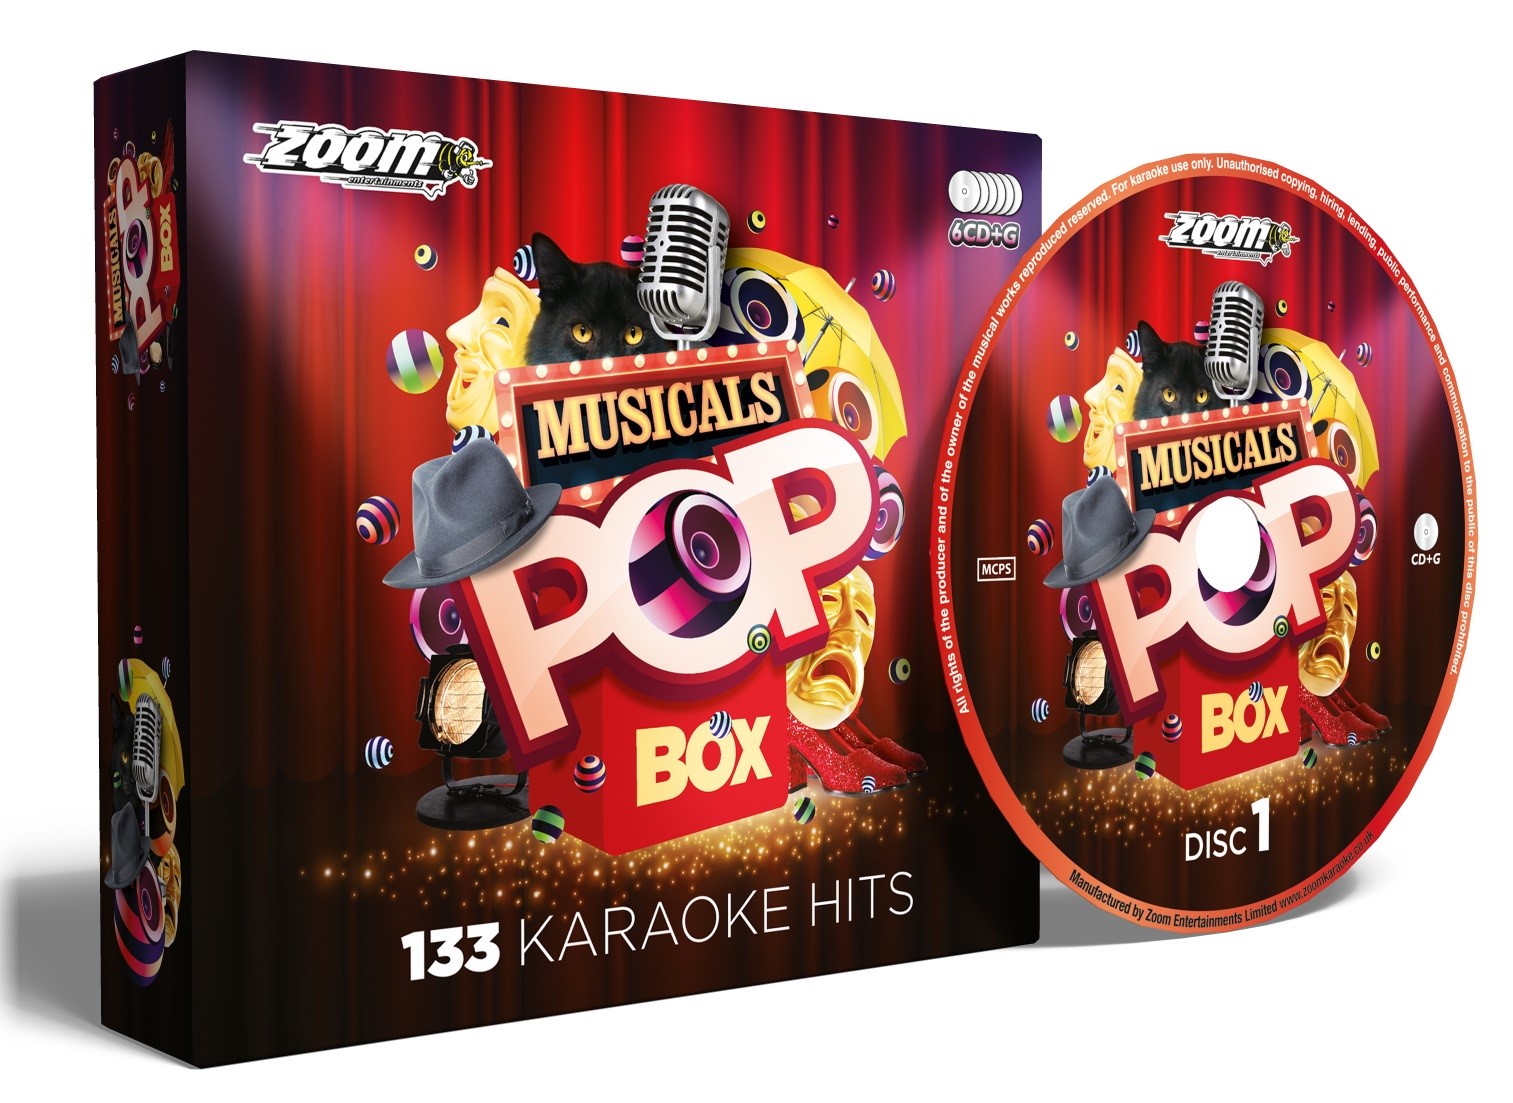 The Ultimate Karaoke Party Pack from Zoom Karaoke 6 CD+G Box Set 